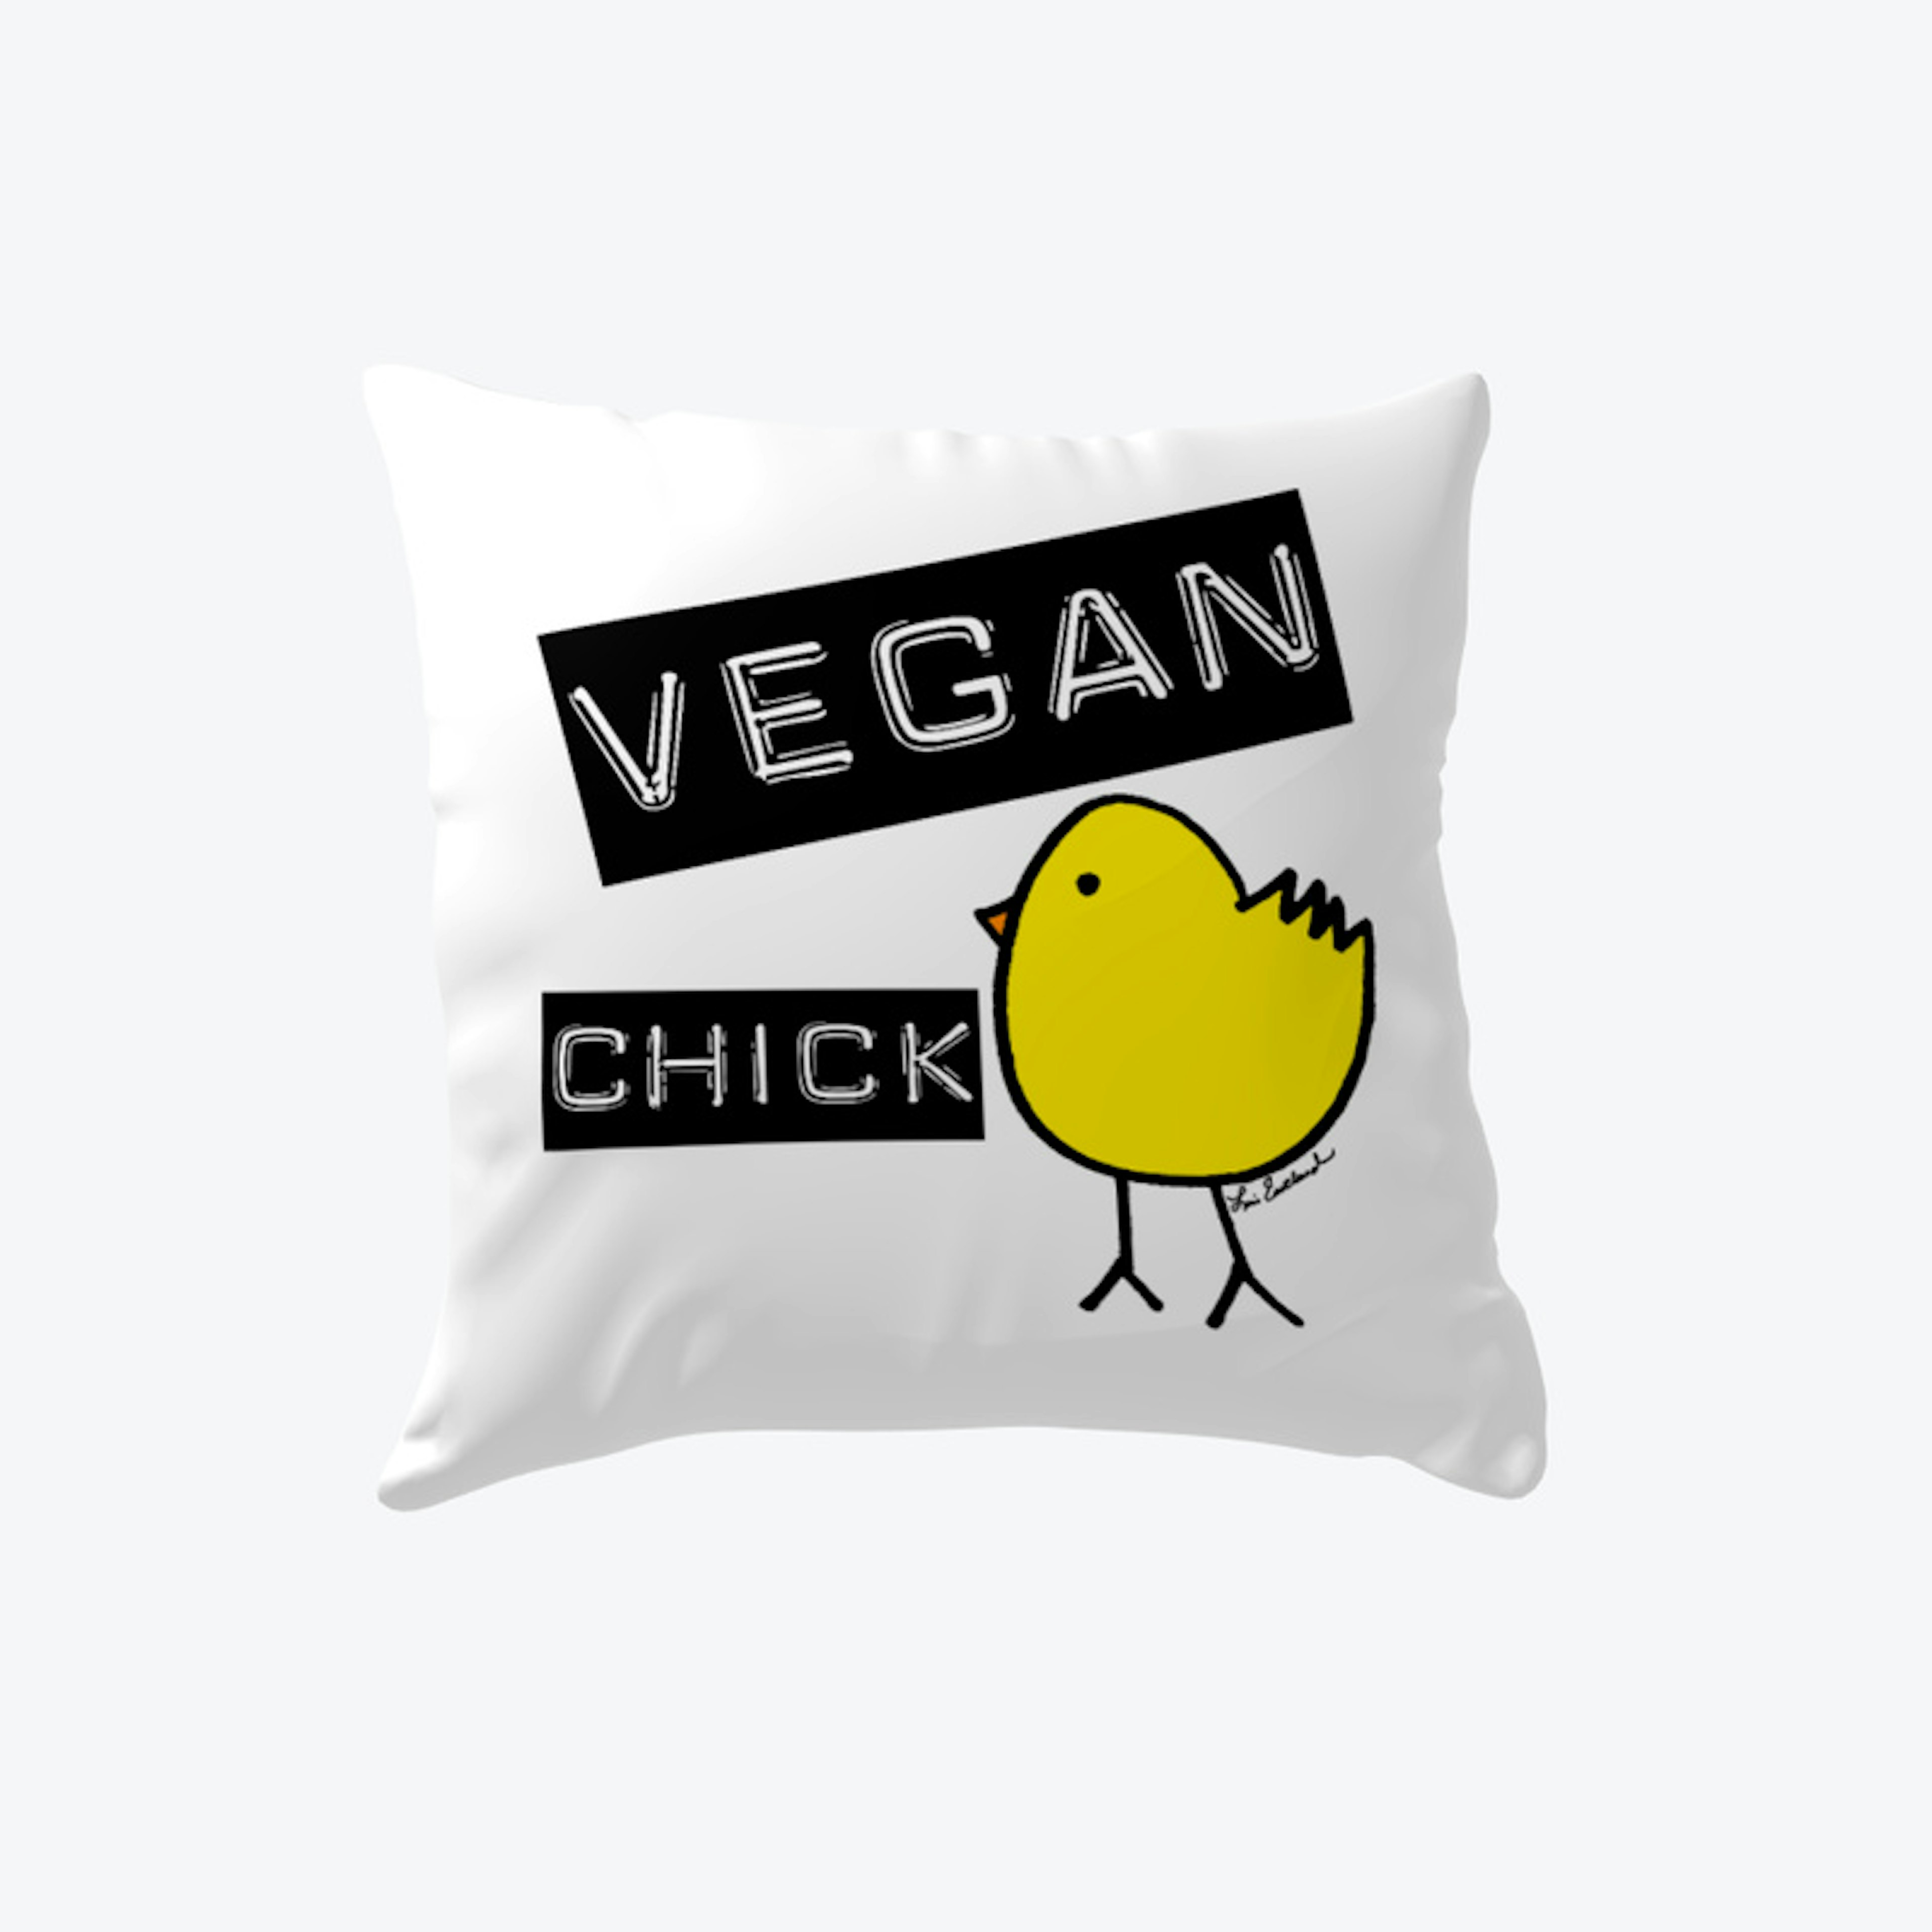 Vegan Chick